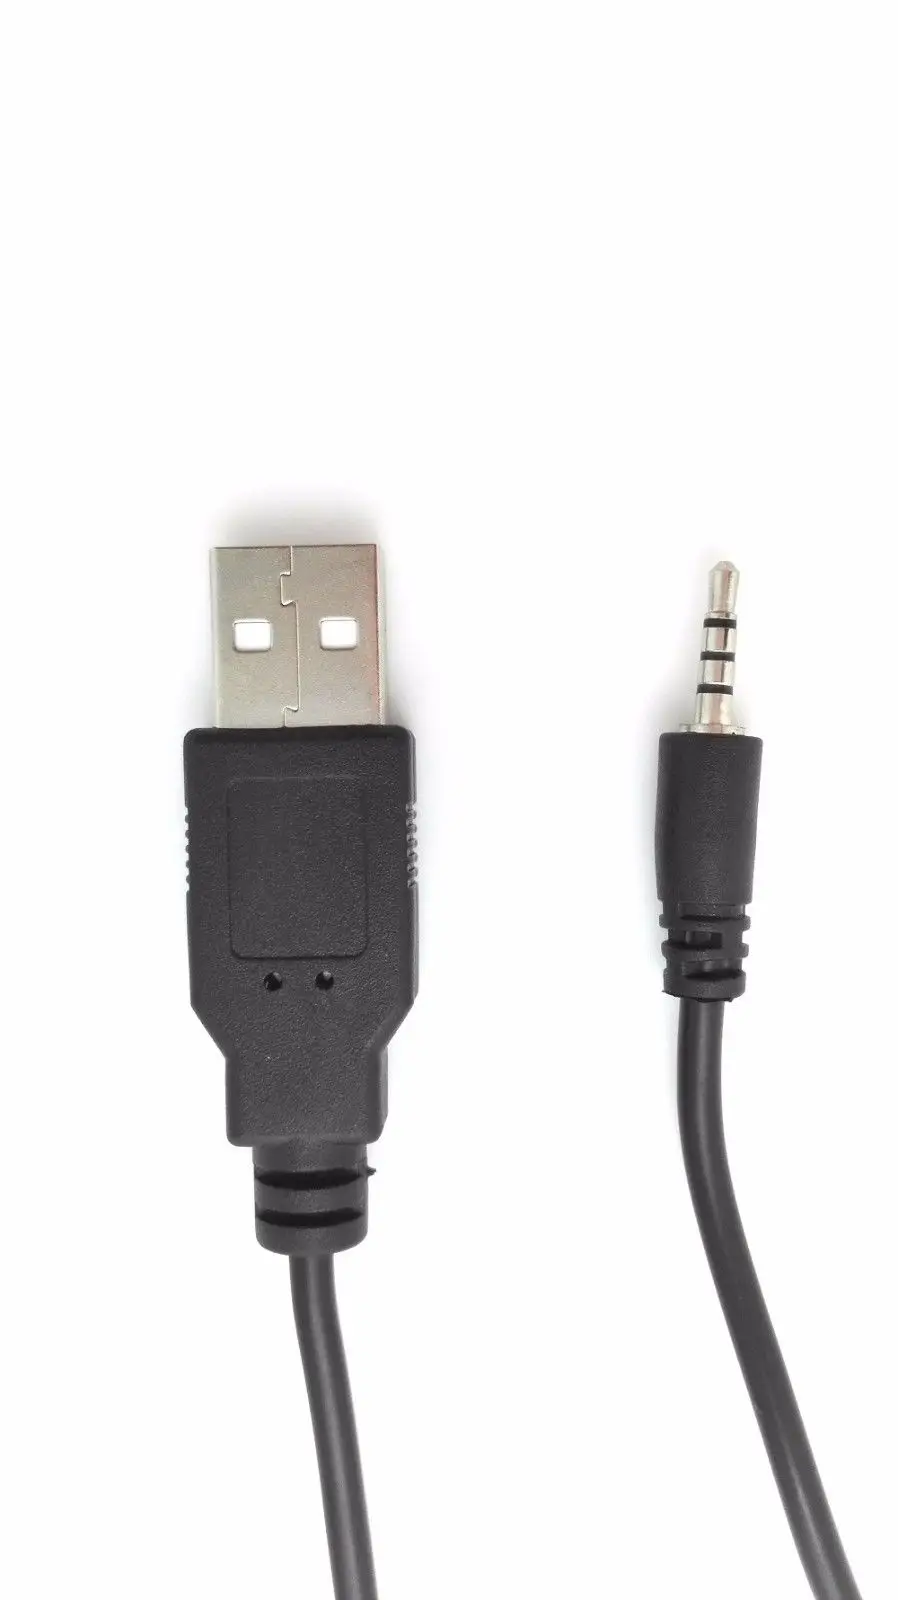 JBL Sinhronizatorji E40BT/E50BT/J56BT Slušalke, USB CHARGE in Avdio kabel Zamenjava